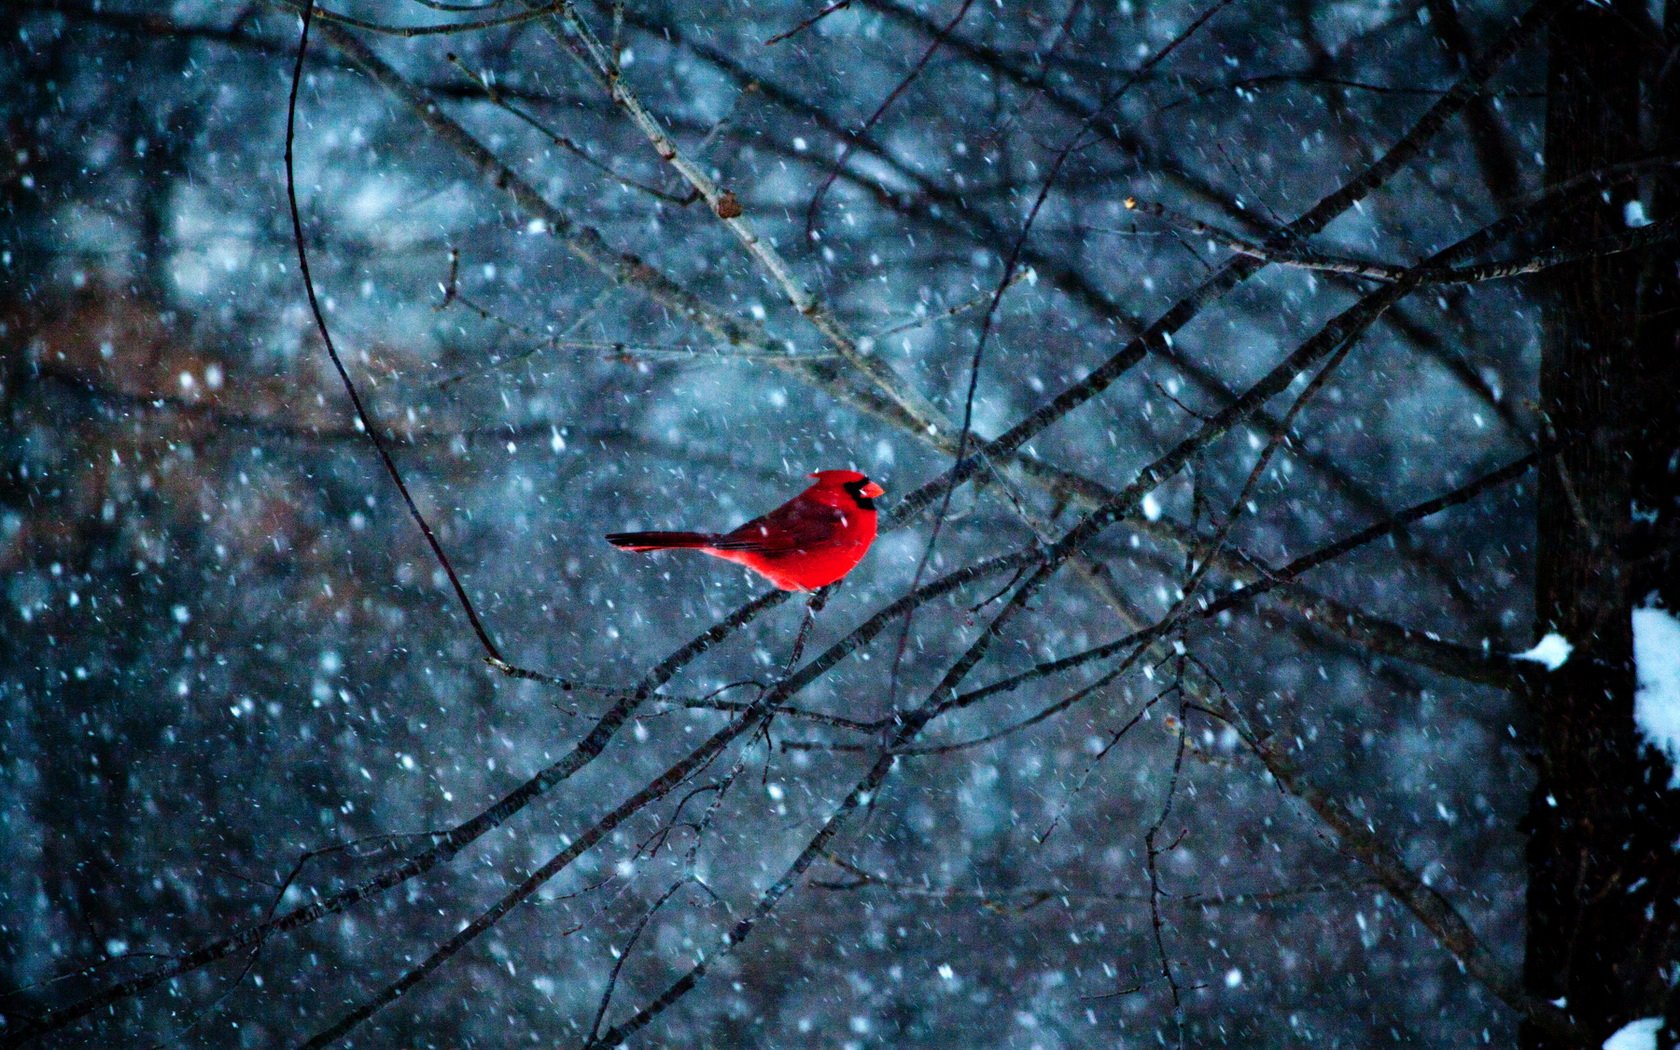 Red Bird in Snowflakes wallpaper by LadyGaga RevelWallpapersnet